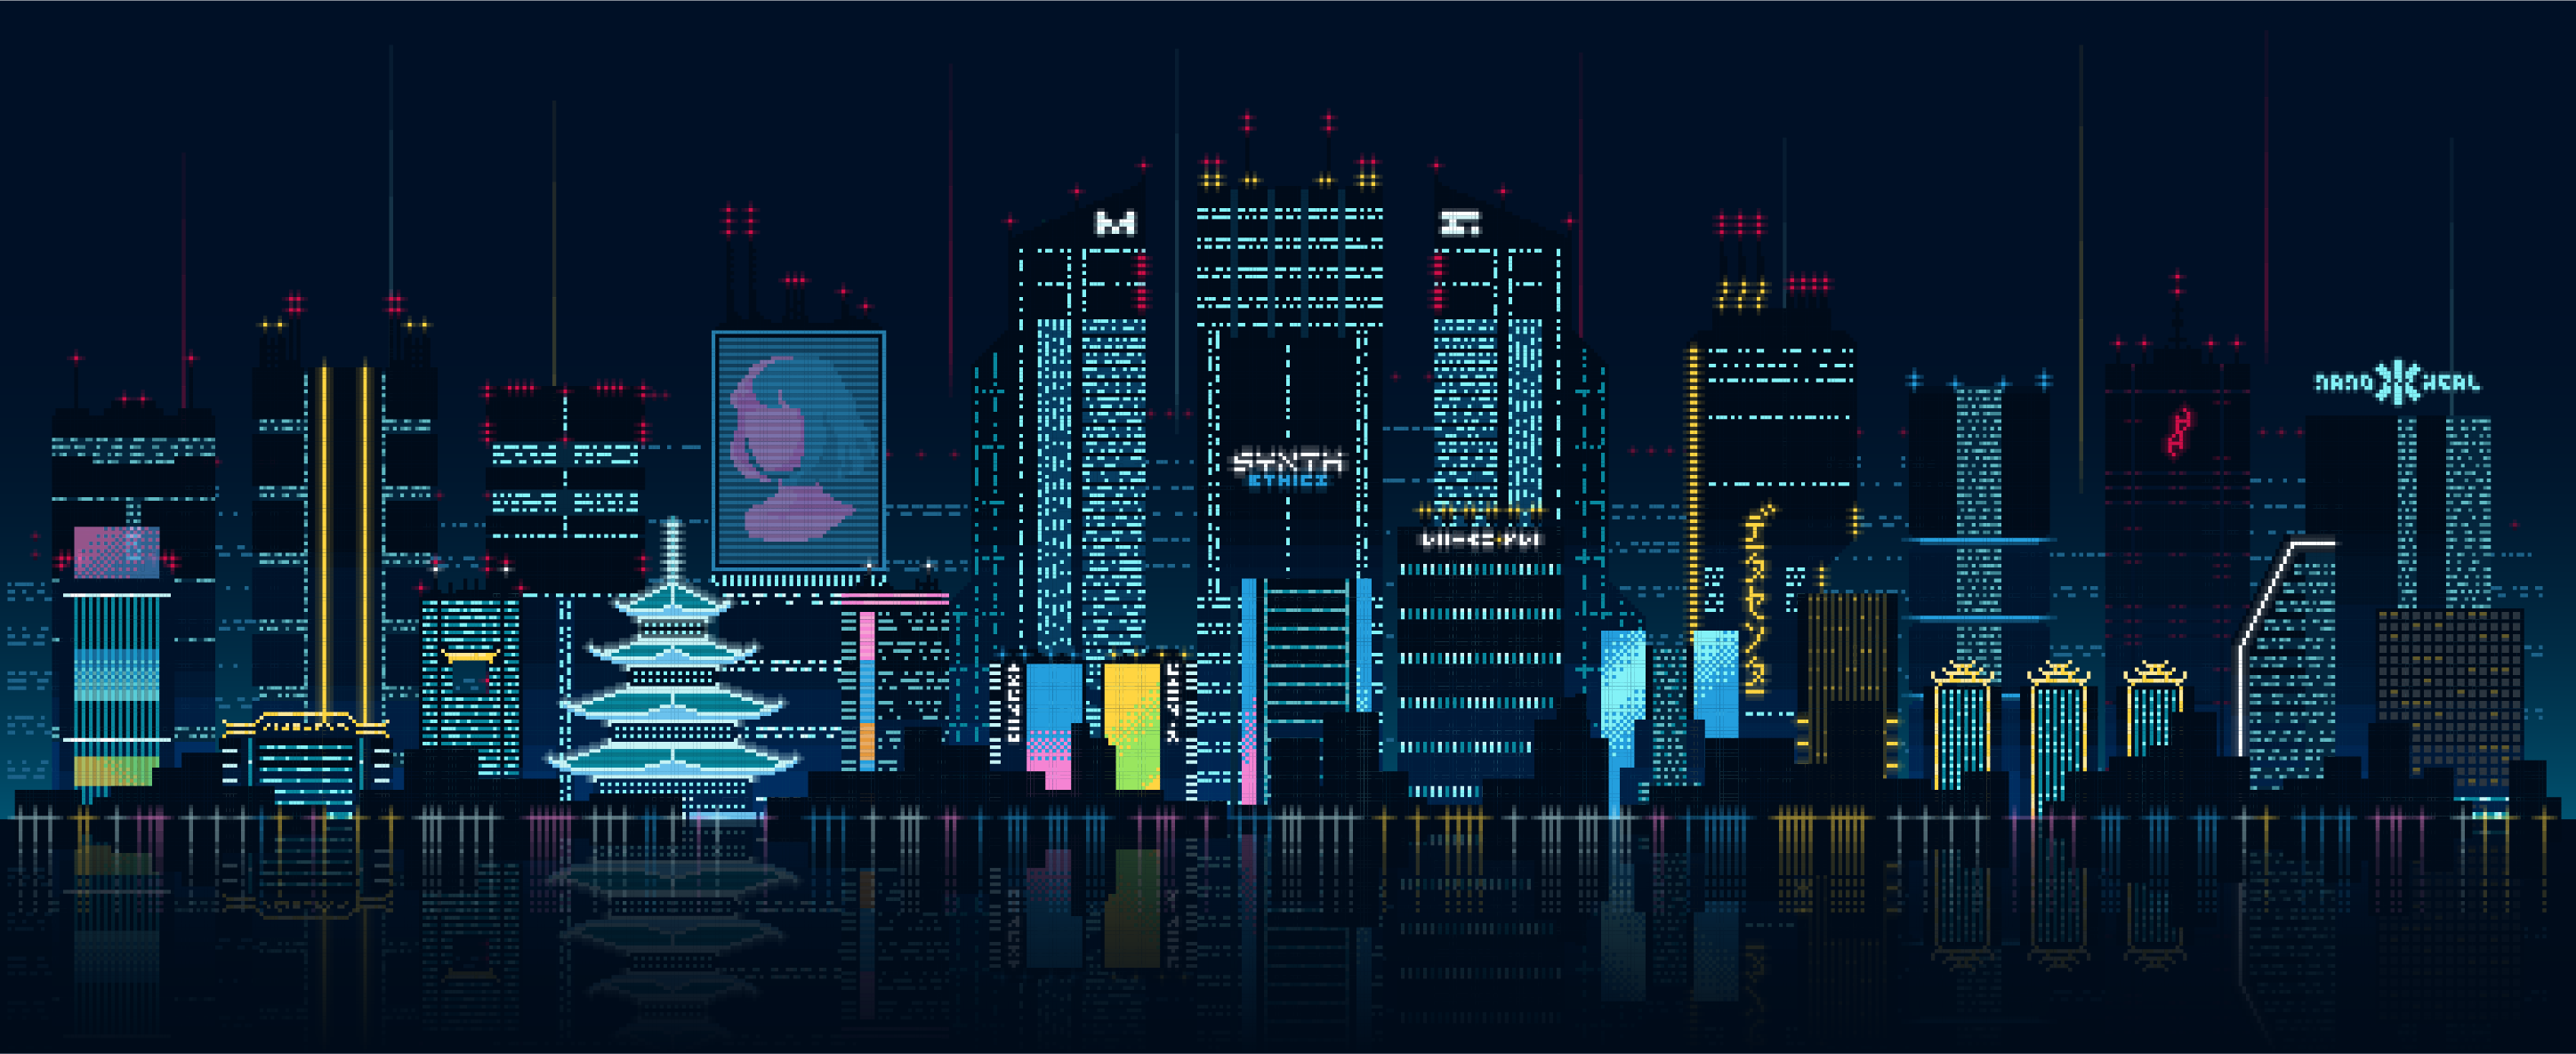 Cyberpunk City Background